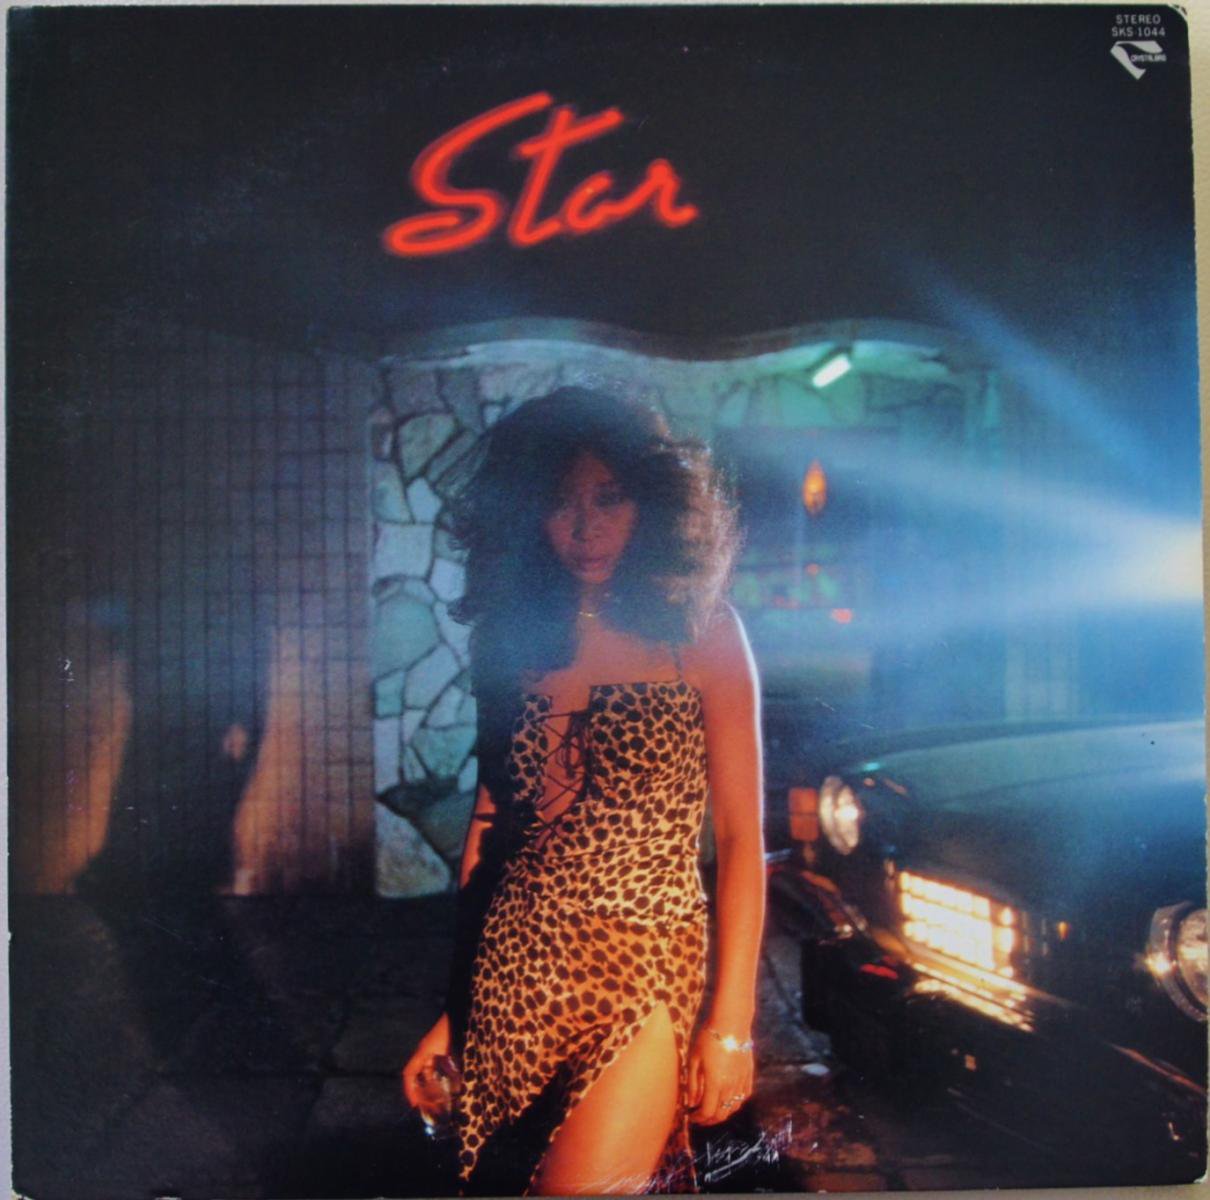 井田リエ & 42ND STREET (RIE & 42ND STREET) / STAR (LP)